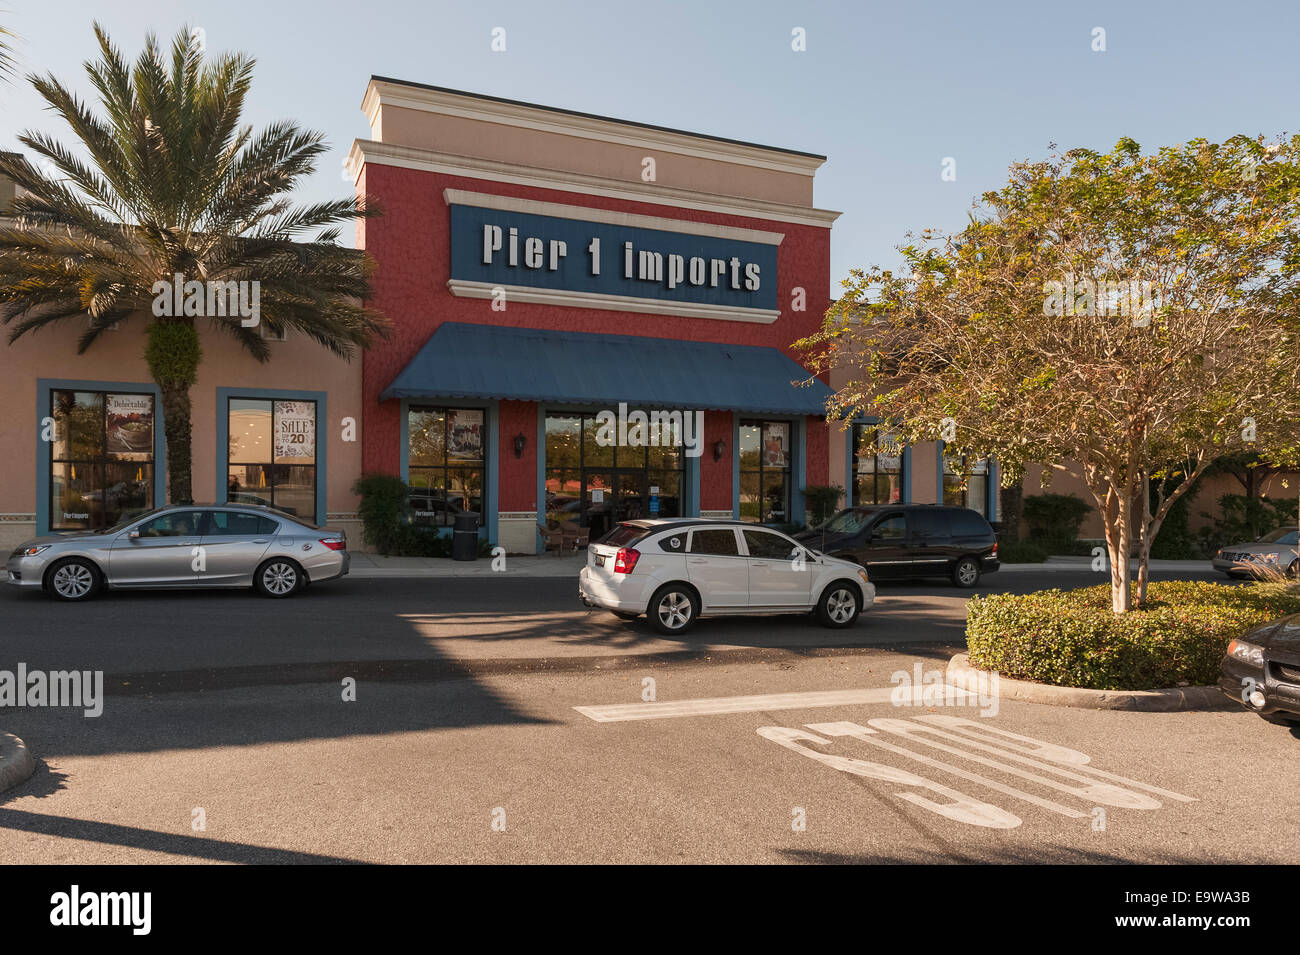 Pier 1 befindet sich Importe Storefront in Lady Lake, Florida USA Stockfoto